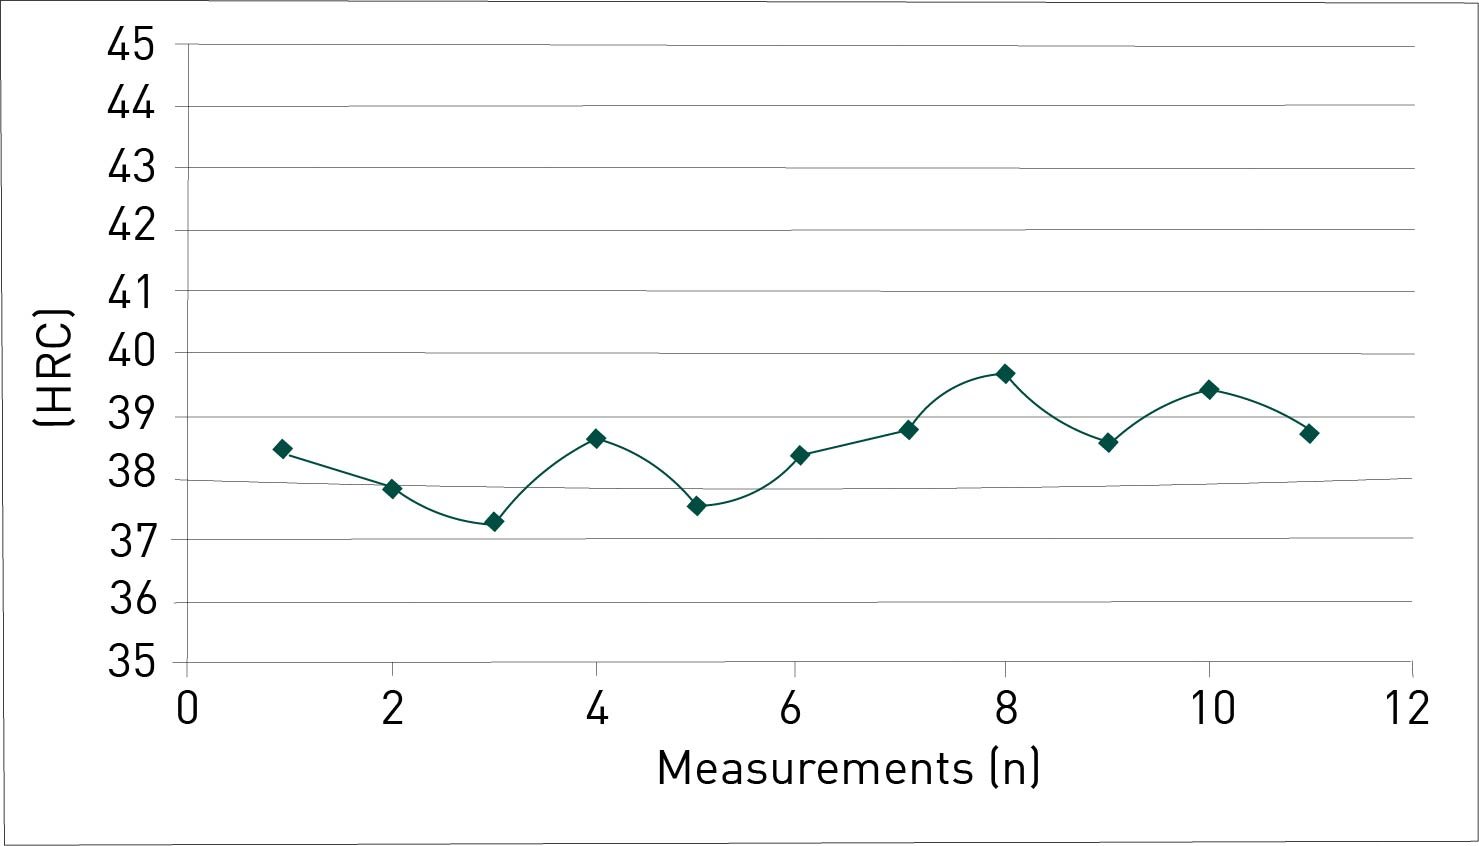 Measurements of screws 